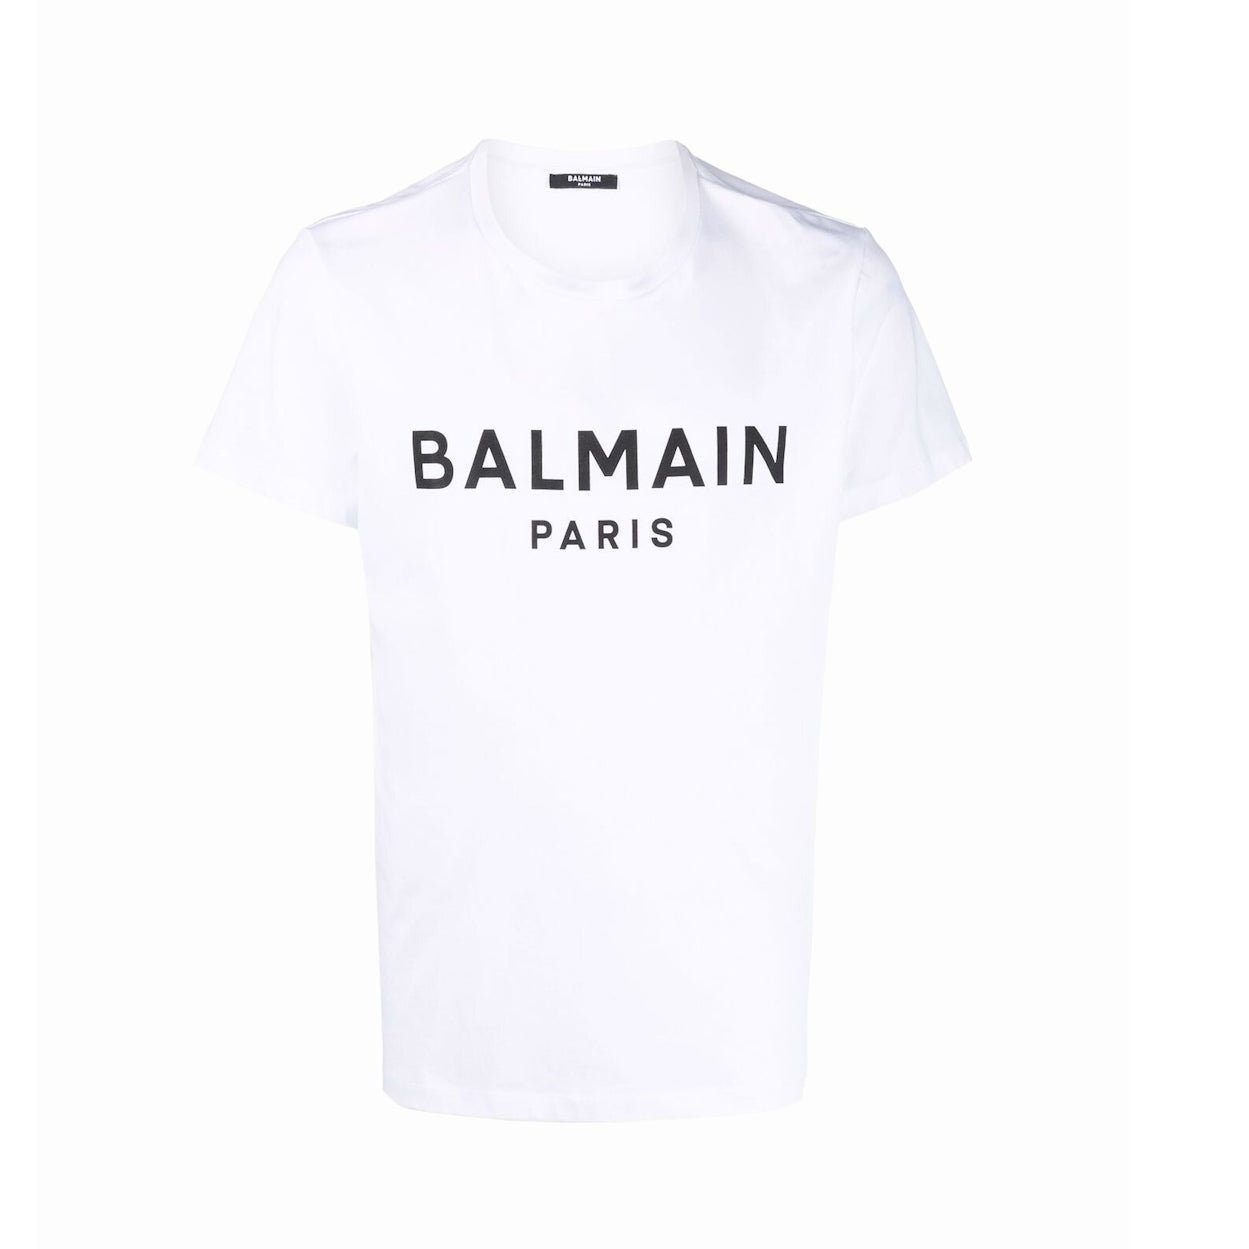 Balmain Paris Logo T-Shirt - White - Escape Menswear